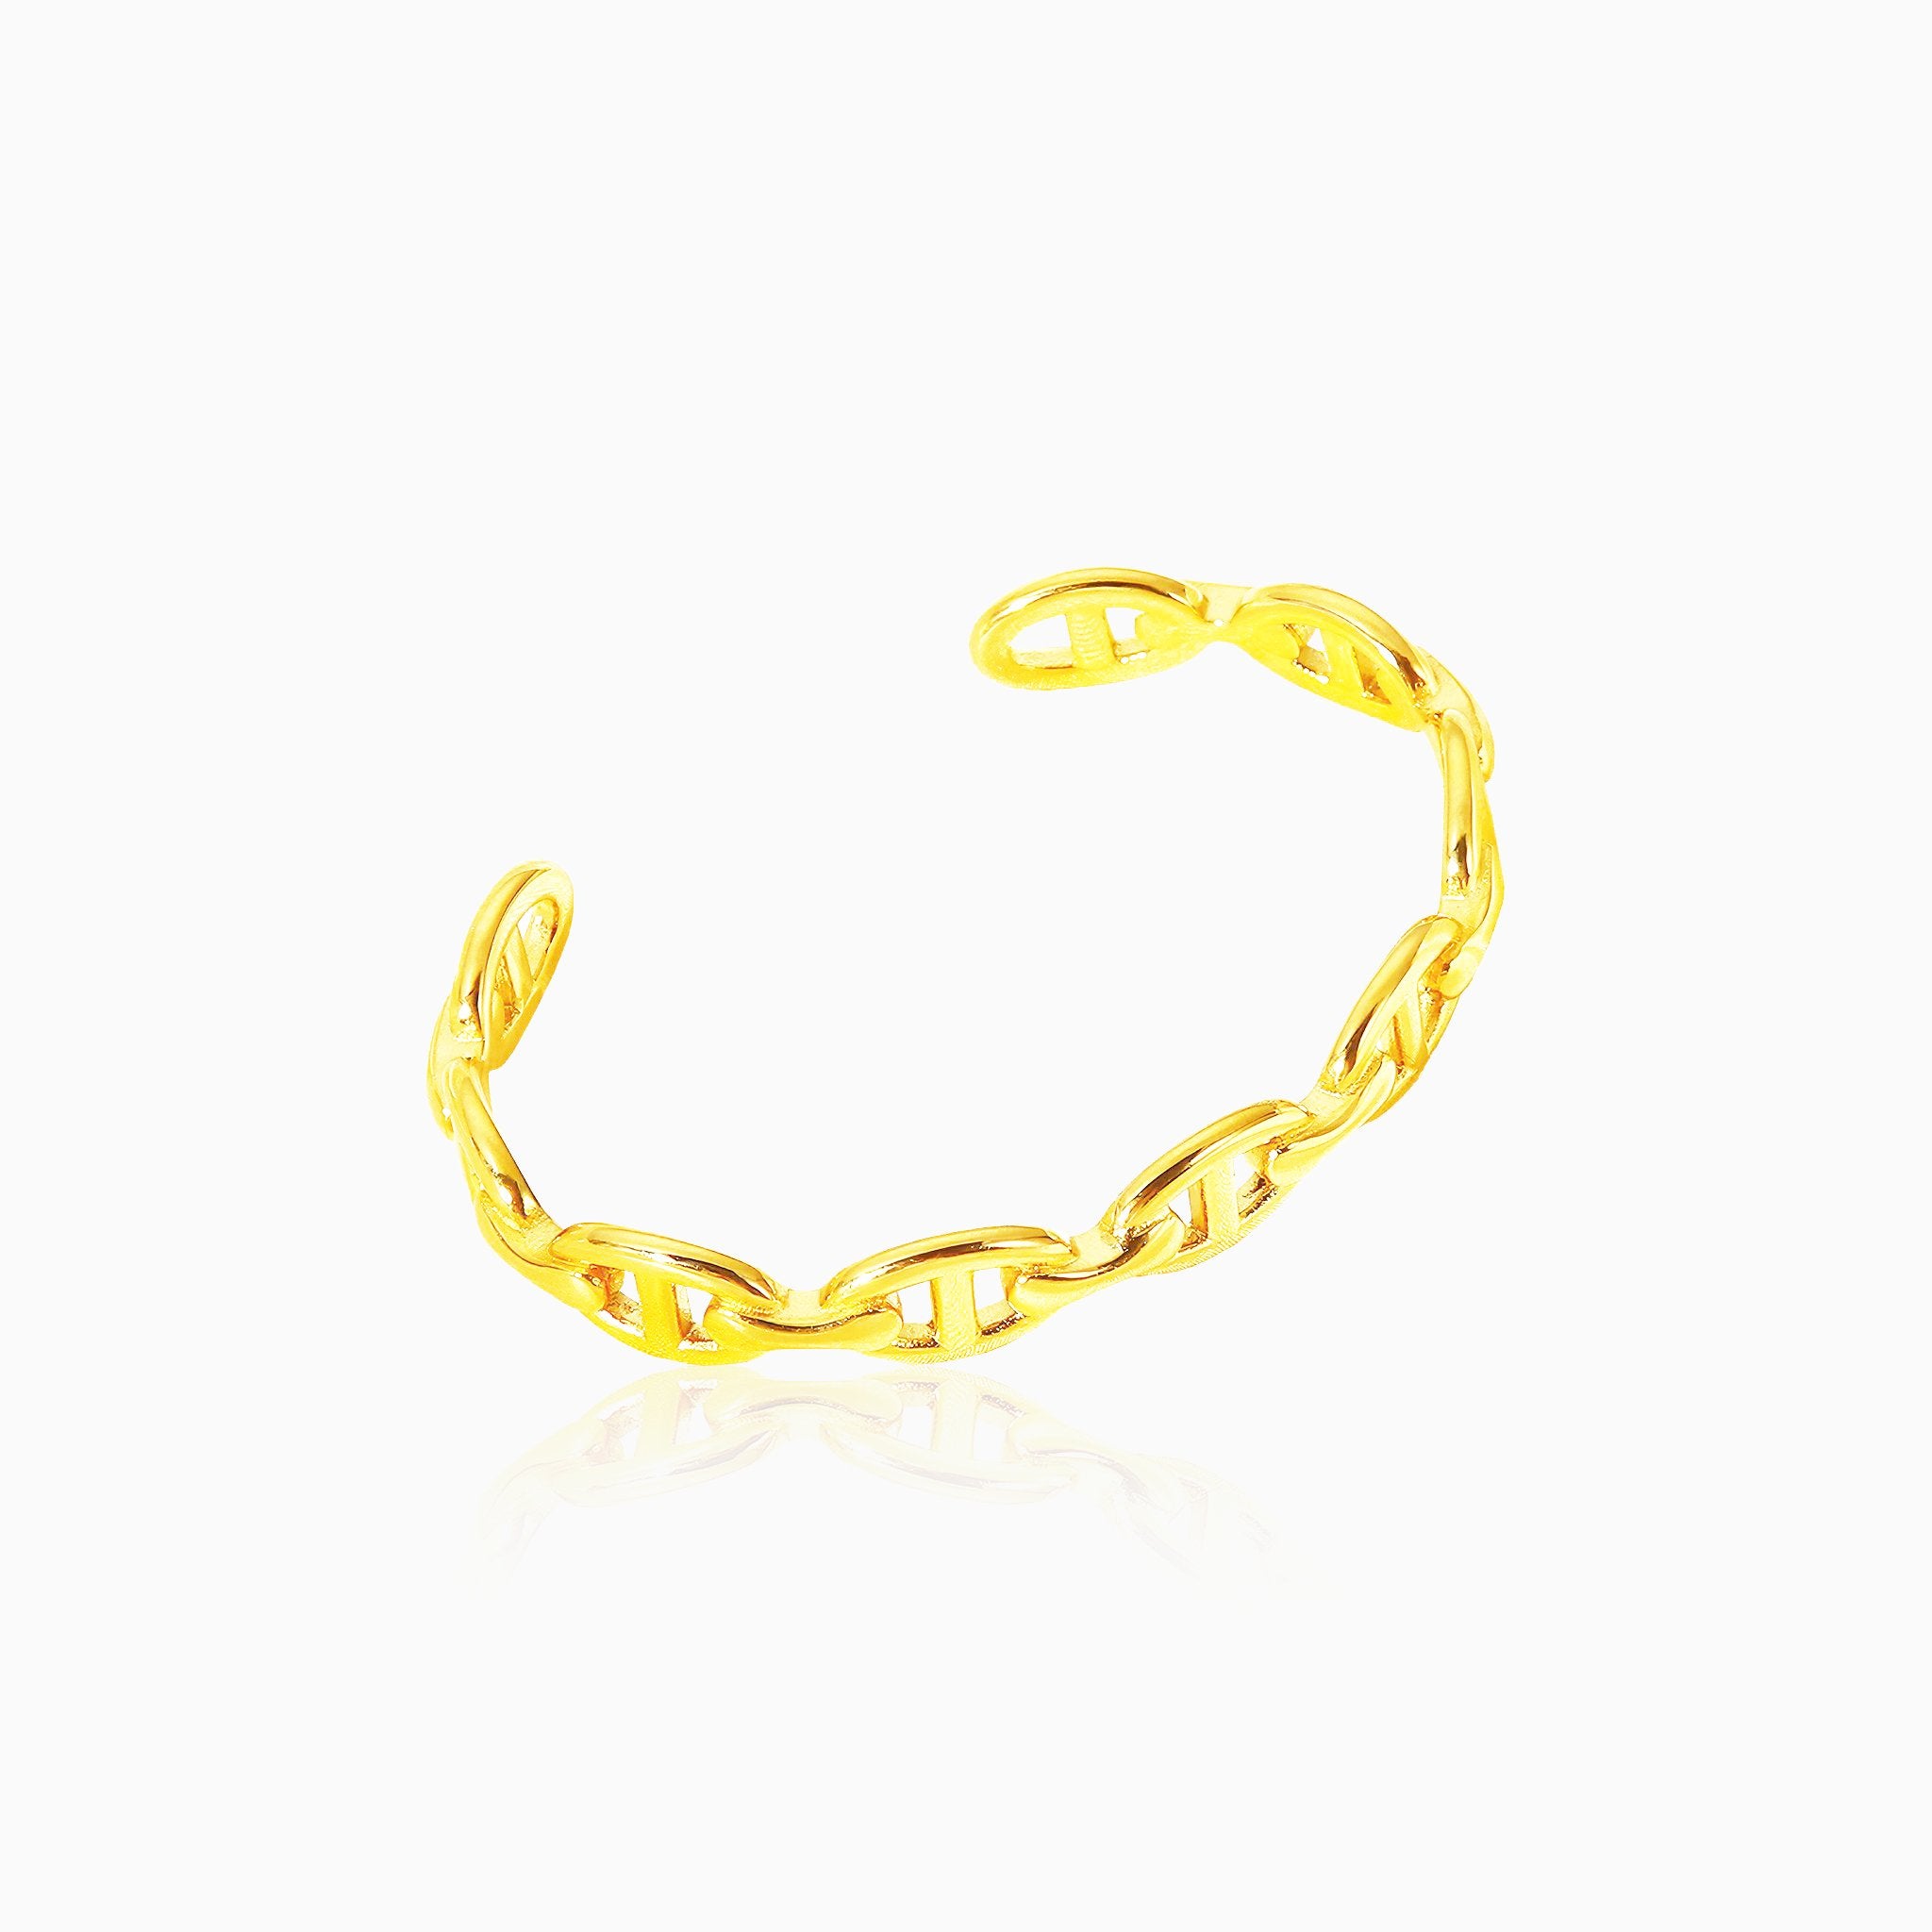 Open Design T-Bracelet - Nobbier - Bracelet - 18K Gold And Titanium PVD Coated Jewelry